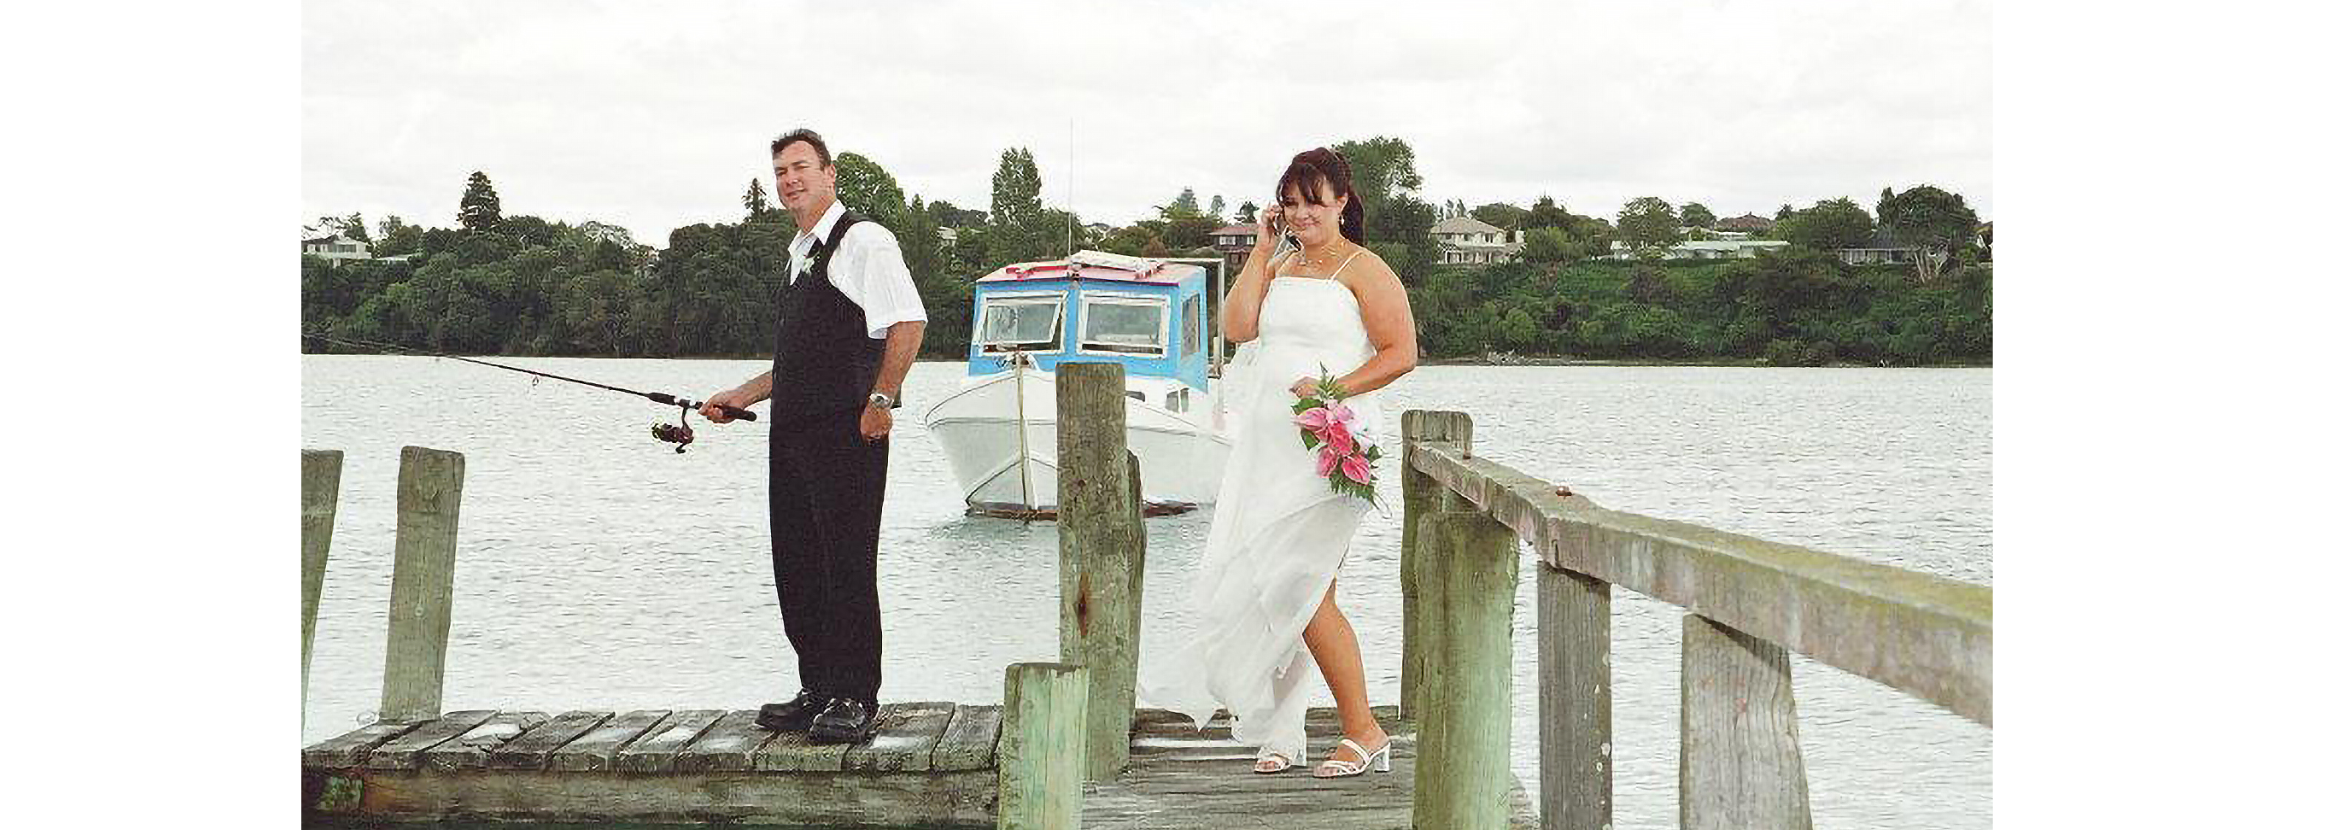 Janine Gartner standing on a pier in her wedding dress, with husband fishing beside her.